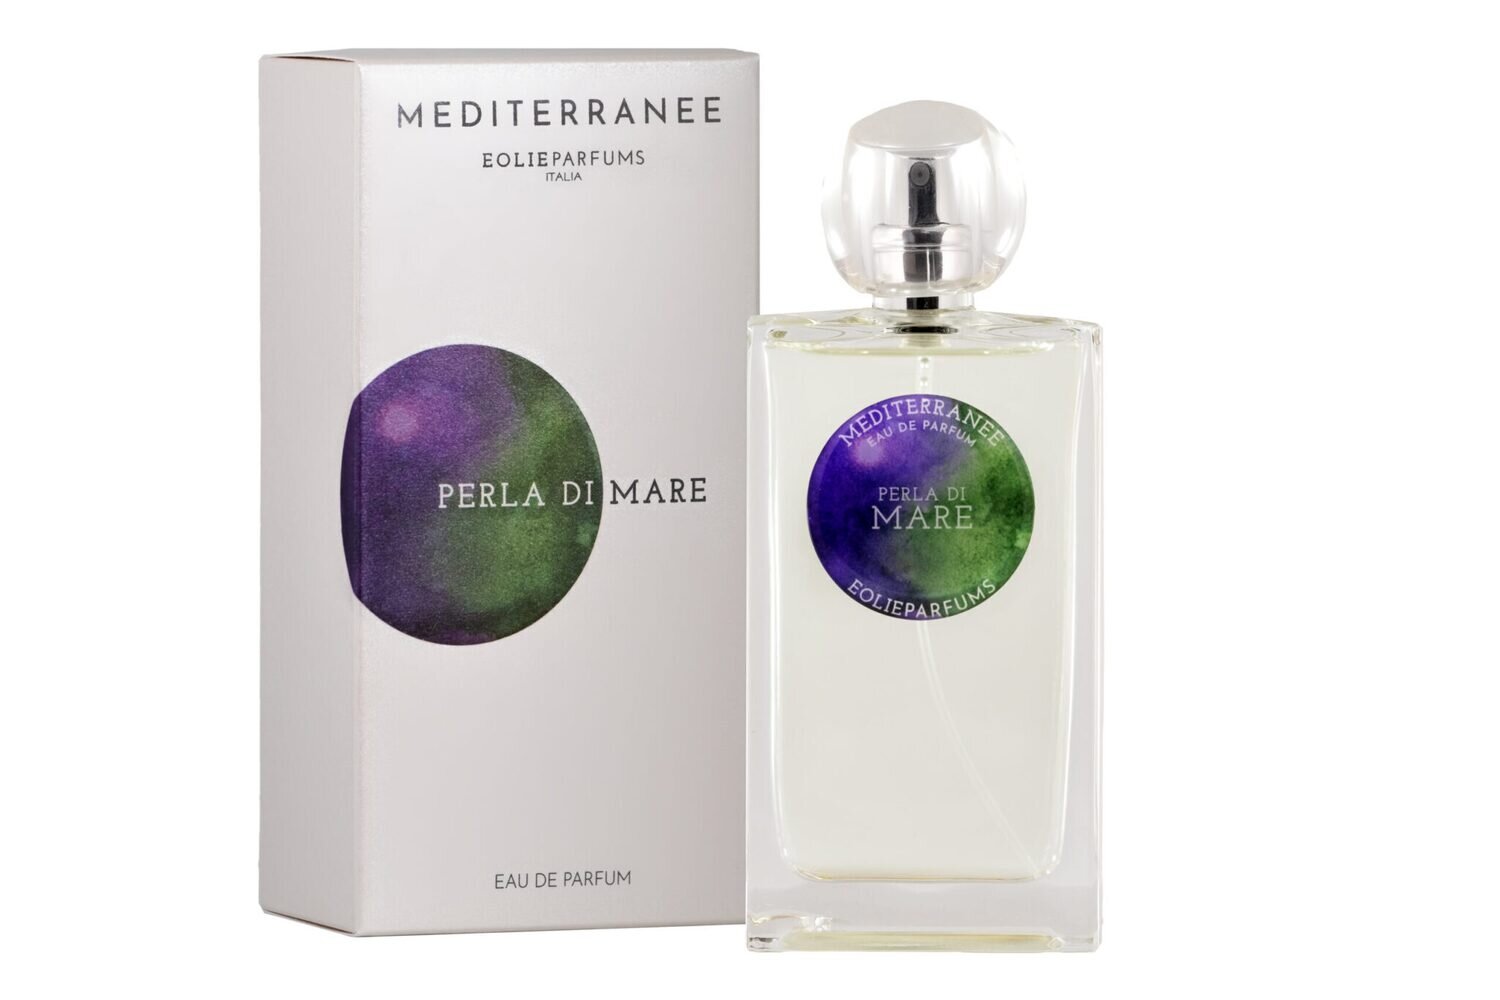 Eolie Parfums Mediterranee Perla di Mare Eau de Parfum Unisex 100 ml